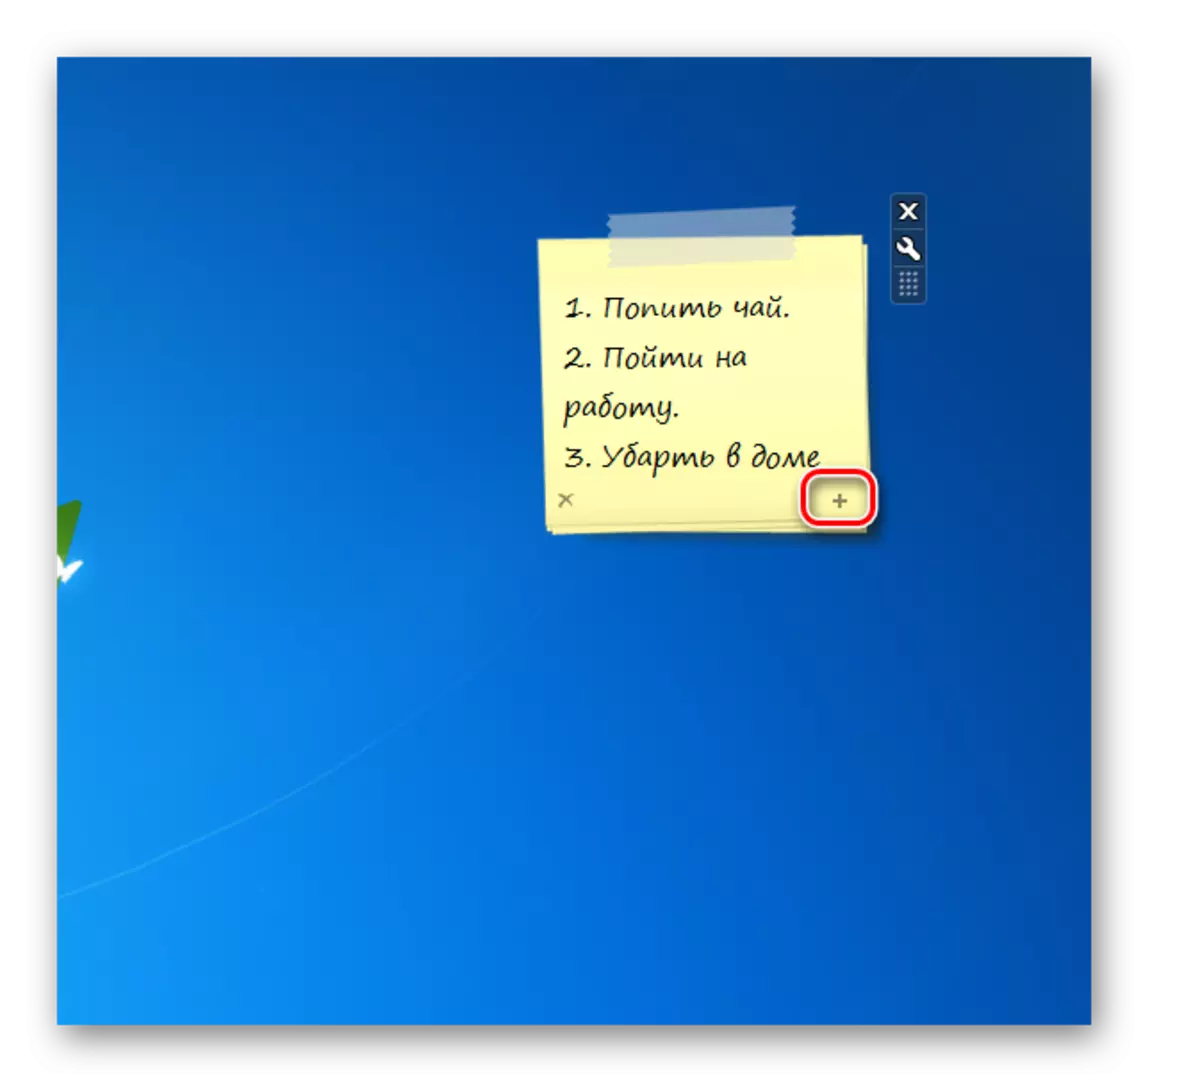 Windows 7 માં ડેસ્કટૉપ પર કાચંડો નોસ્કોલોર સ્ટીકર ગેજેટ ઇન્ટરફેસમાં આગલું પૃષ્ઠ બનાવવું